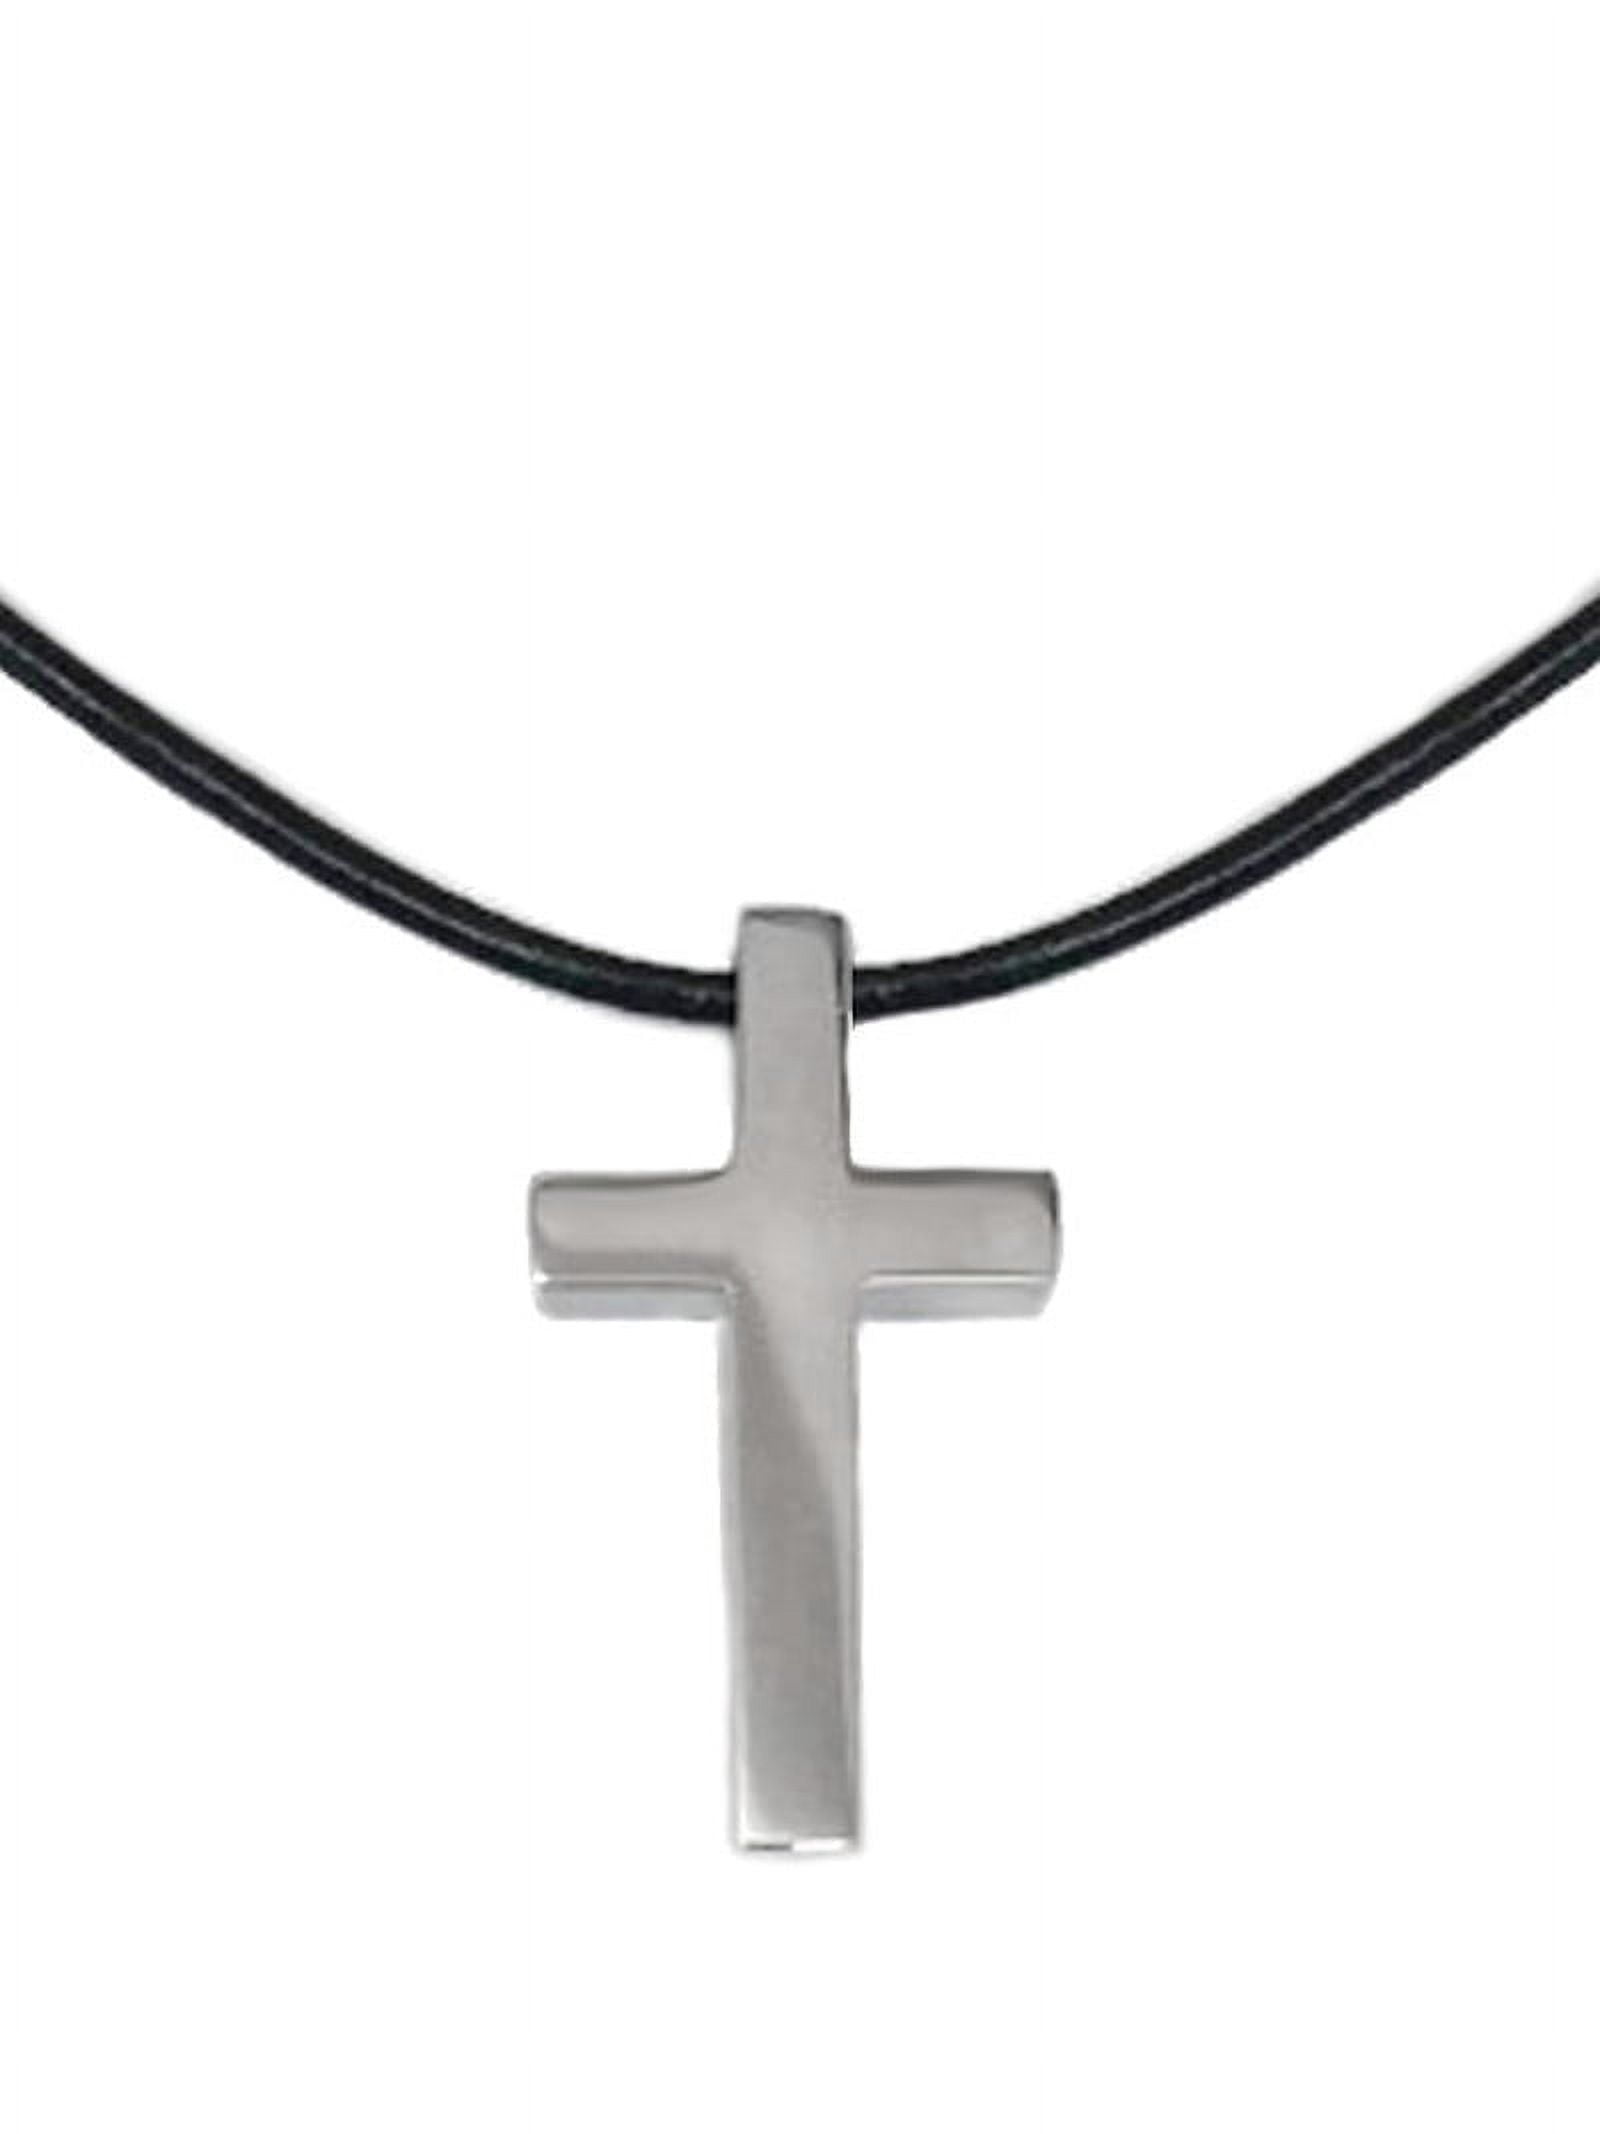 Titanium Cross Religious Leather Link Cord 18 Chain Necklace Pendant Charm:  16457234645043